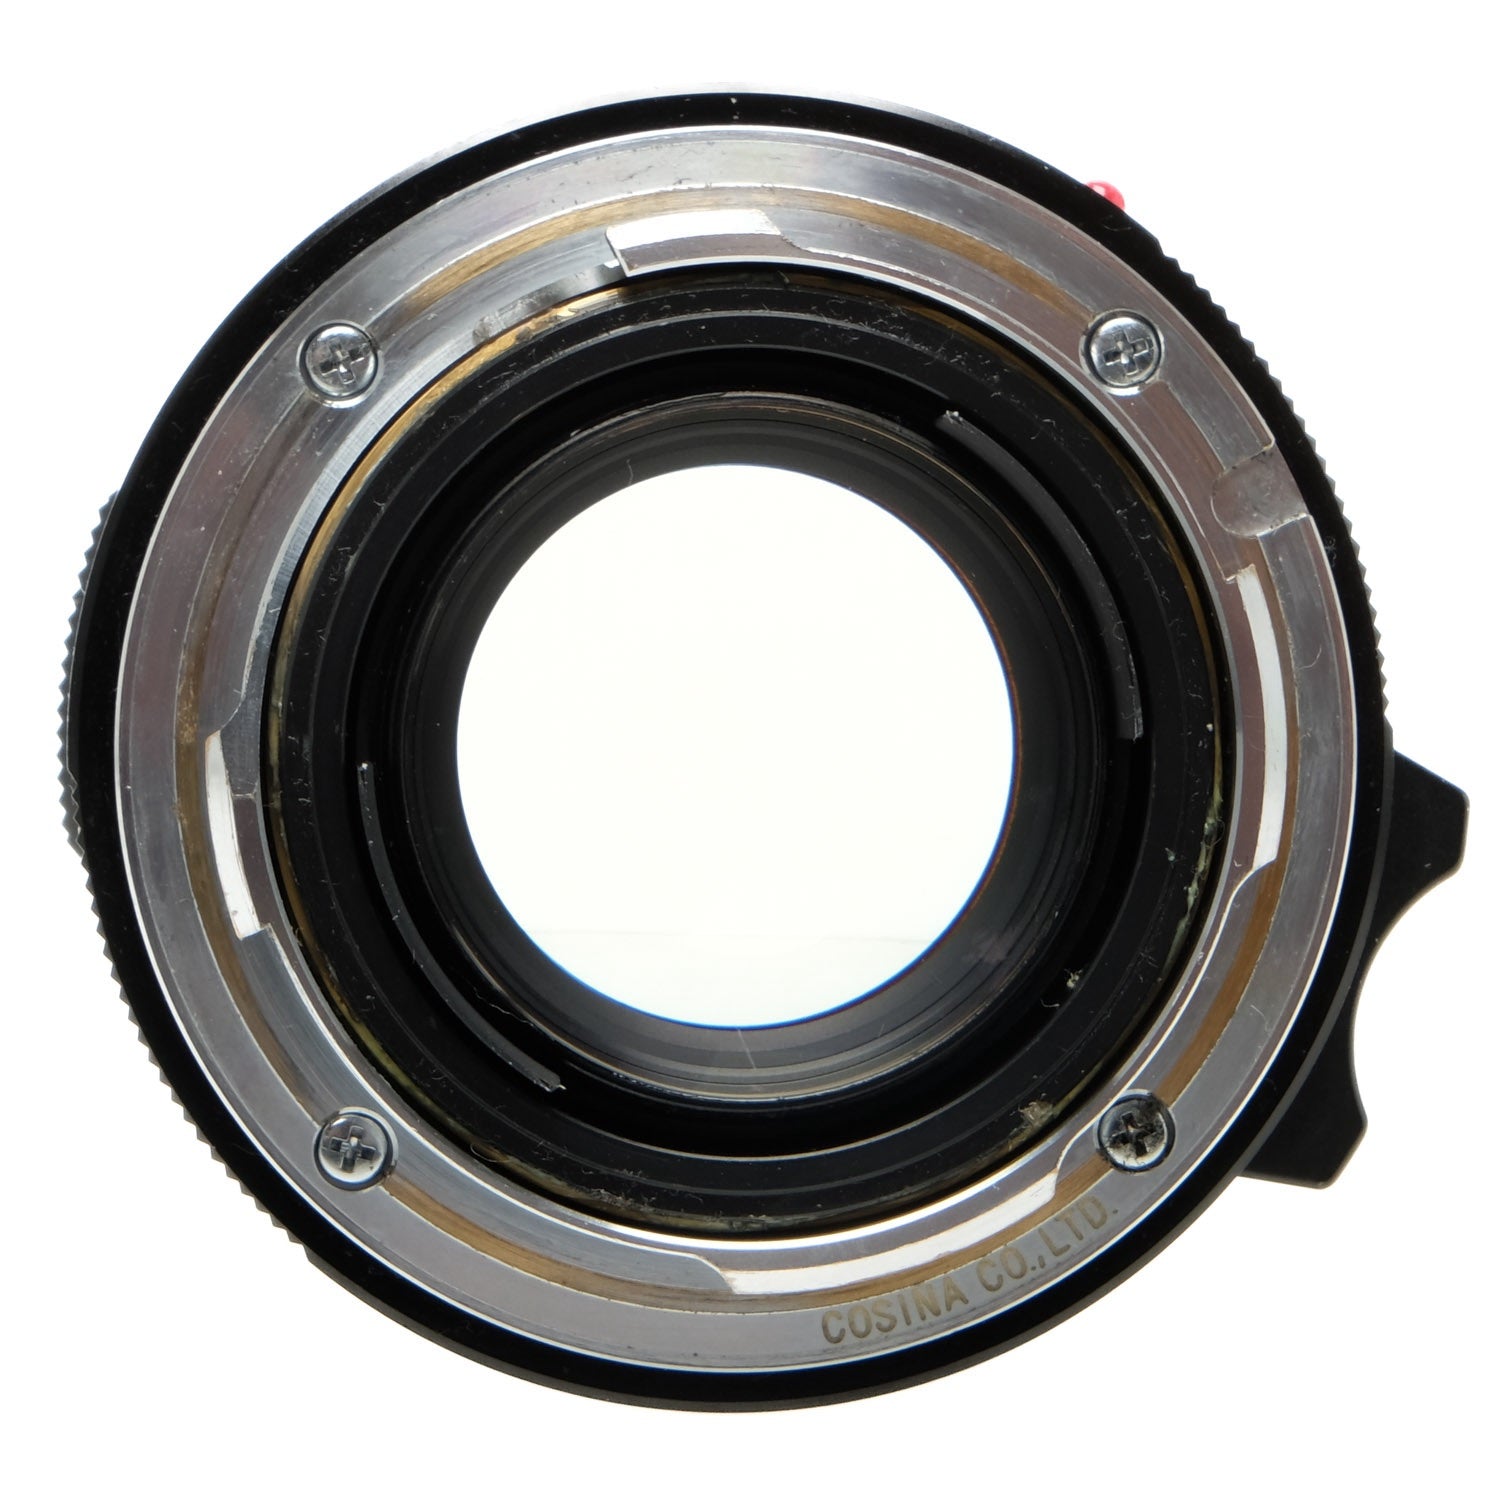 Voigtlander 35mm f1.4 Nokton Classic 8220517 – Camera West